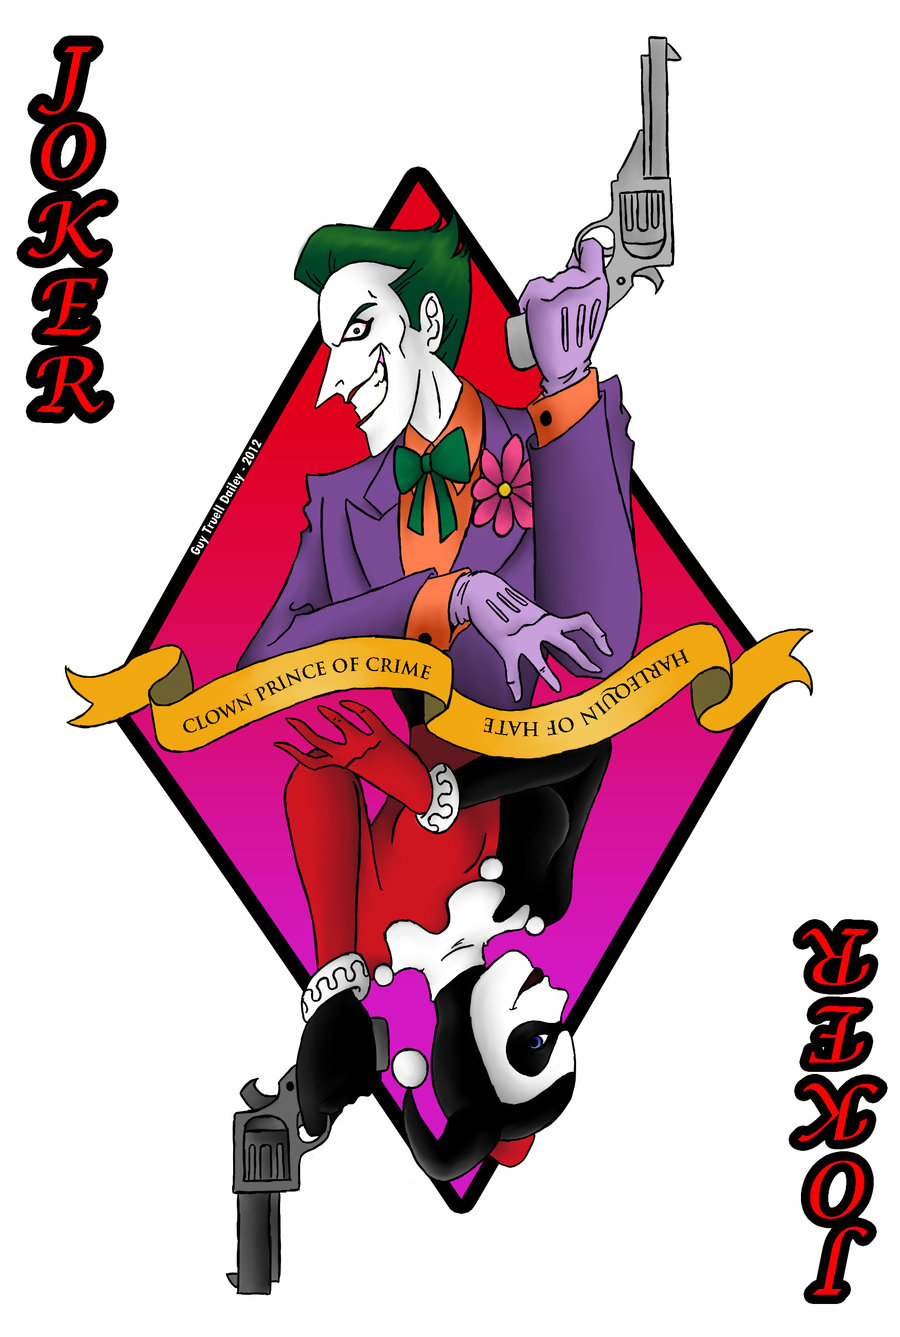 The Joker's Calling Card by DarthGuyford on DeviantArt